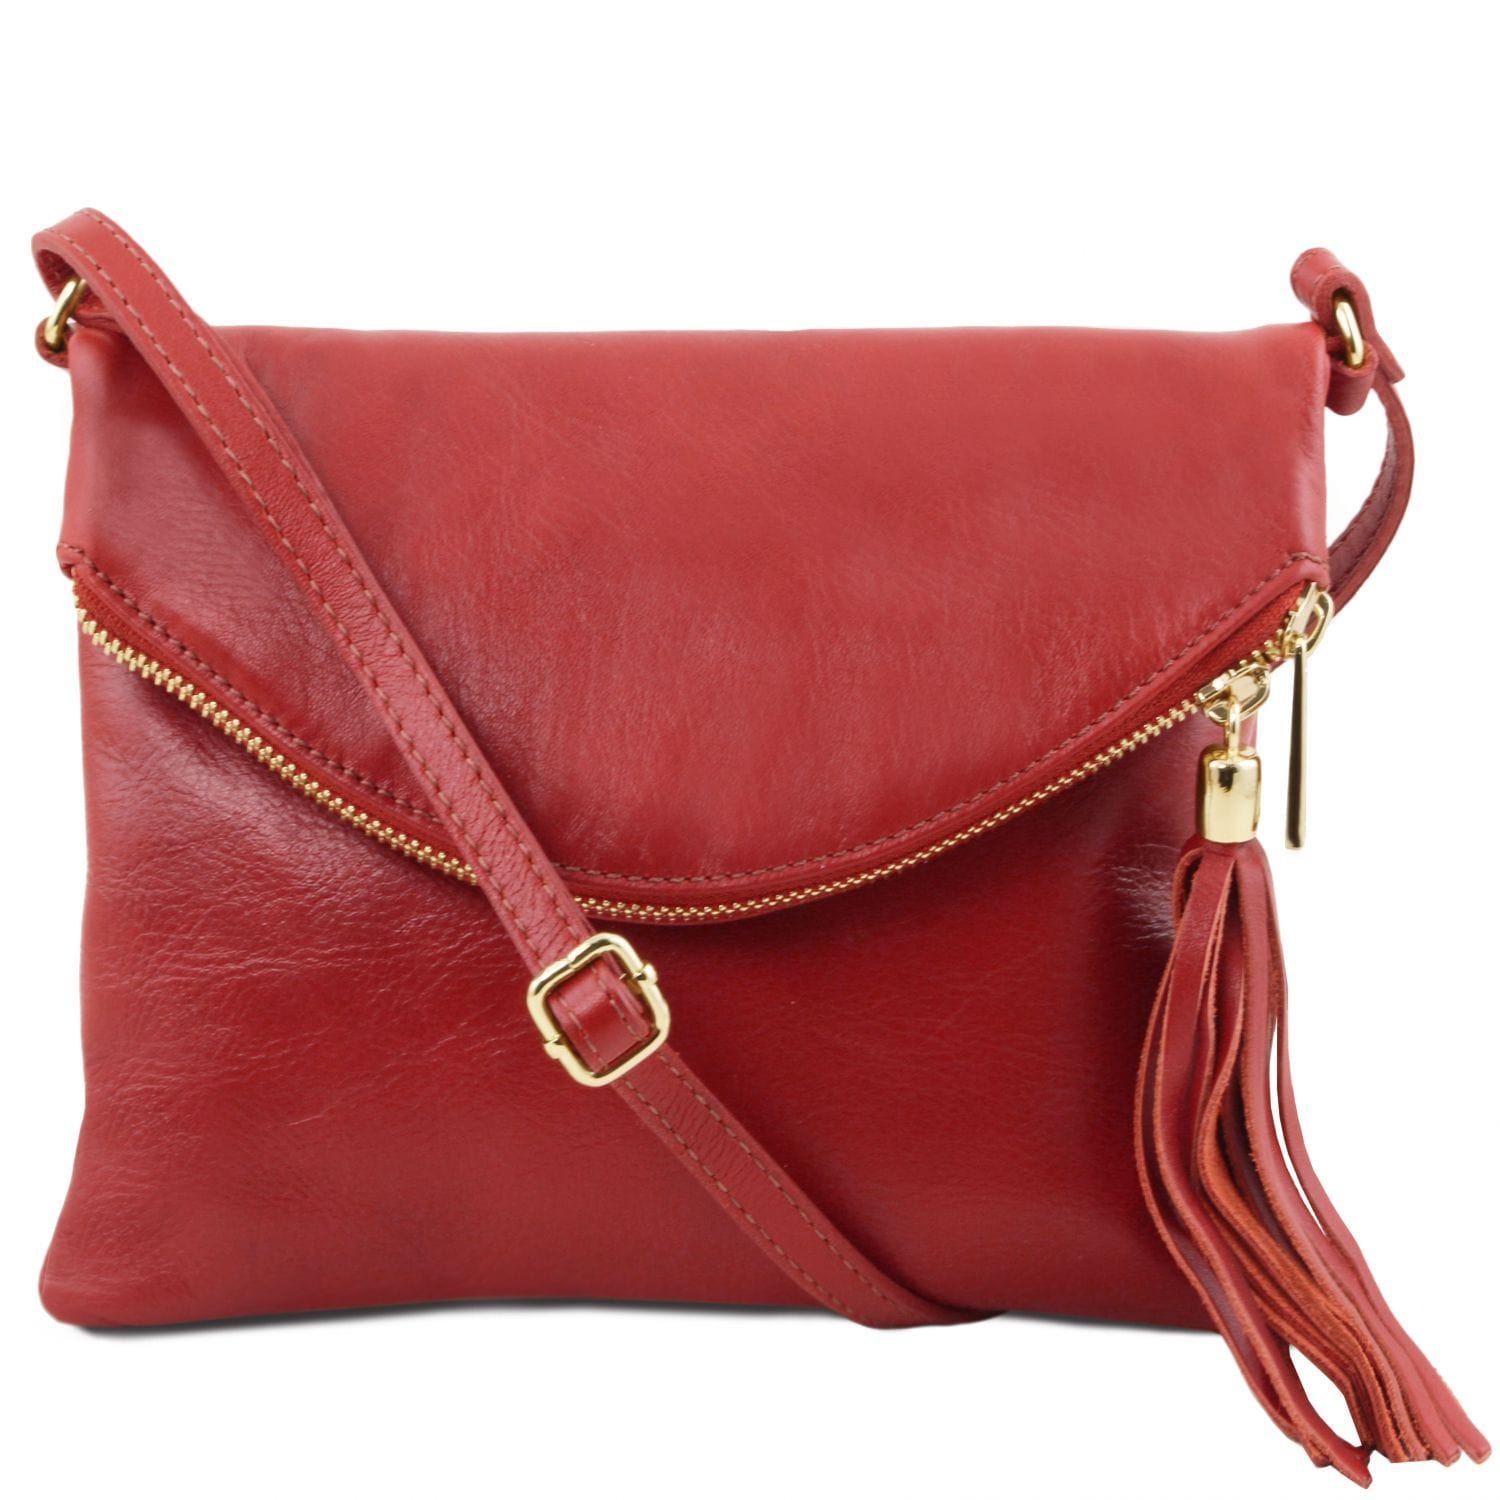 TL Young bag - Shoulder bag with tassel detail | TL141153 - Foldover Crossbody Bag - Premium Leather shoulder bags - Just €68.32! Shop now at San Rocco Italia